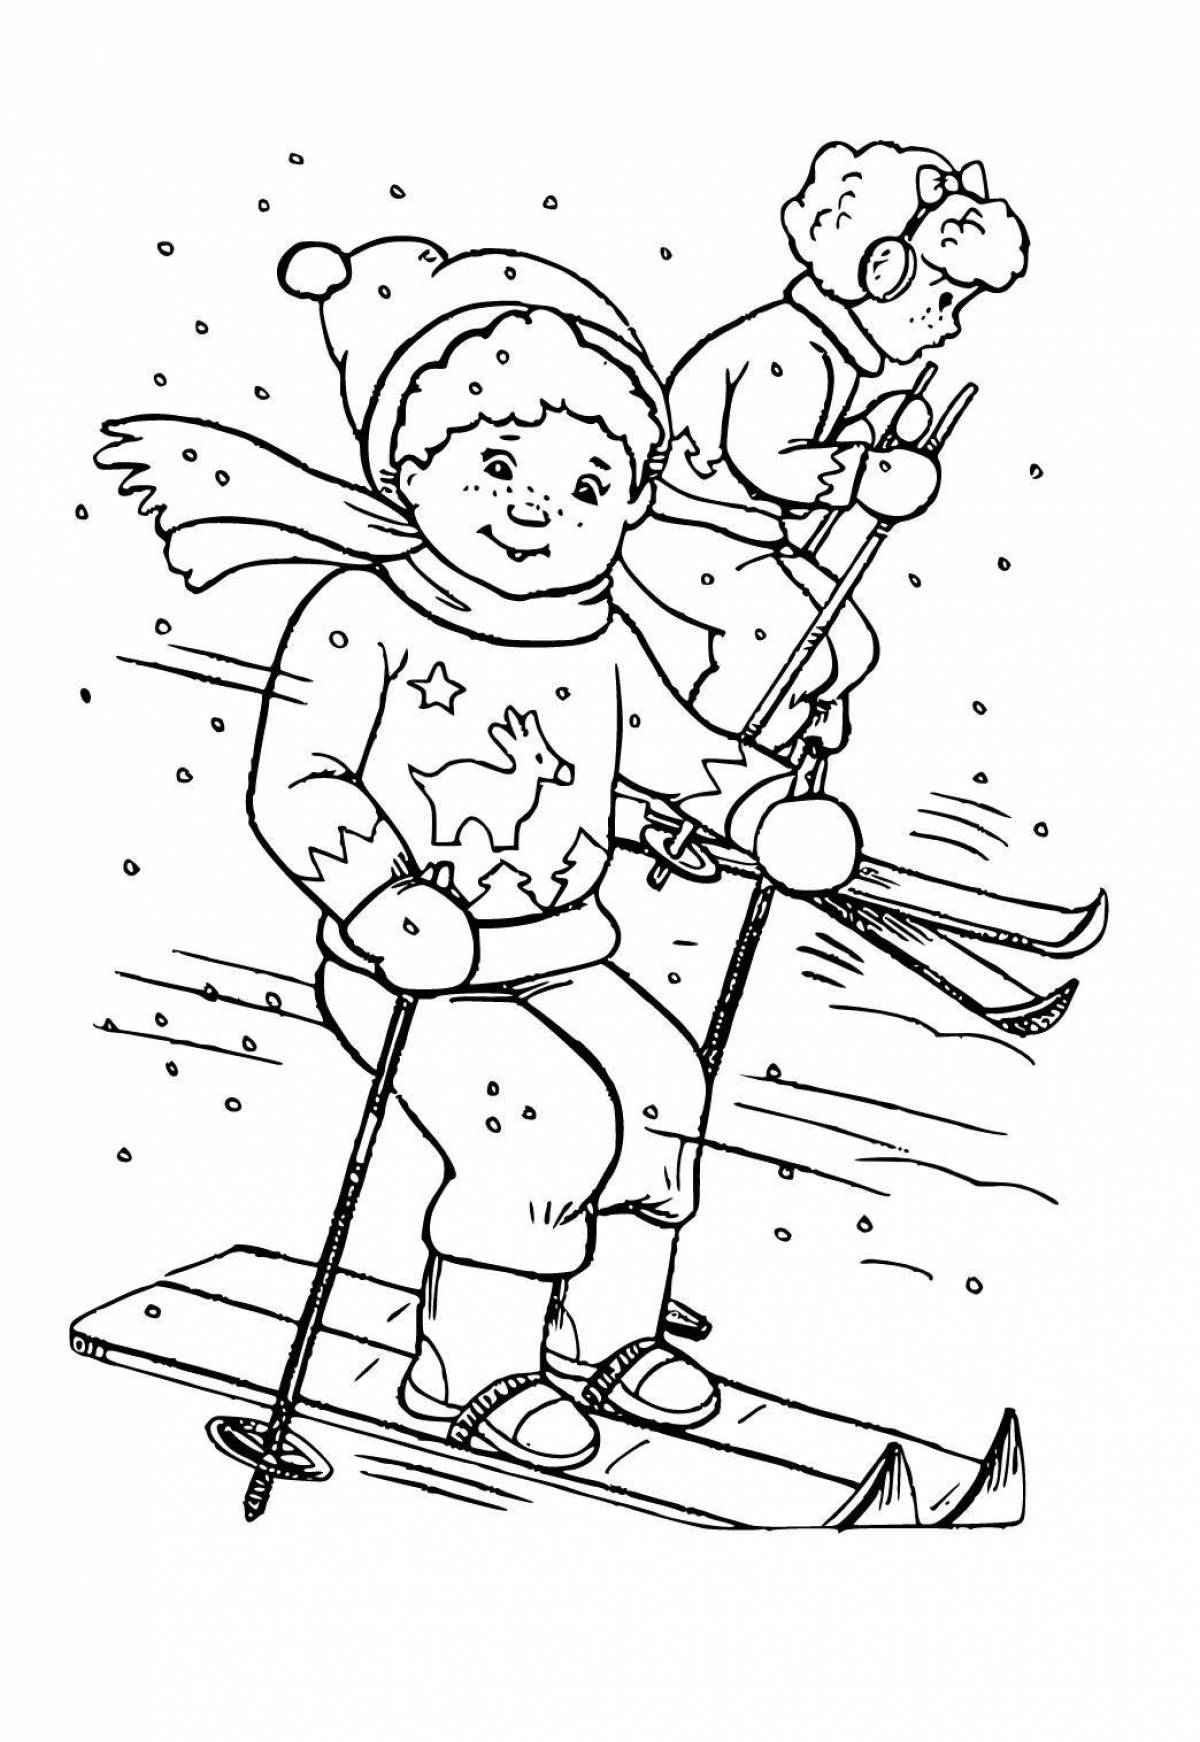 Fierce man on skis